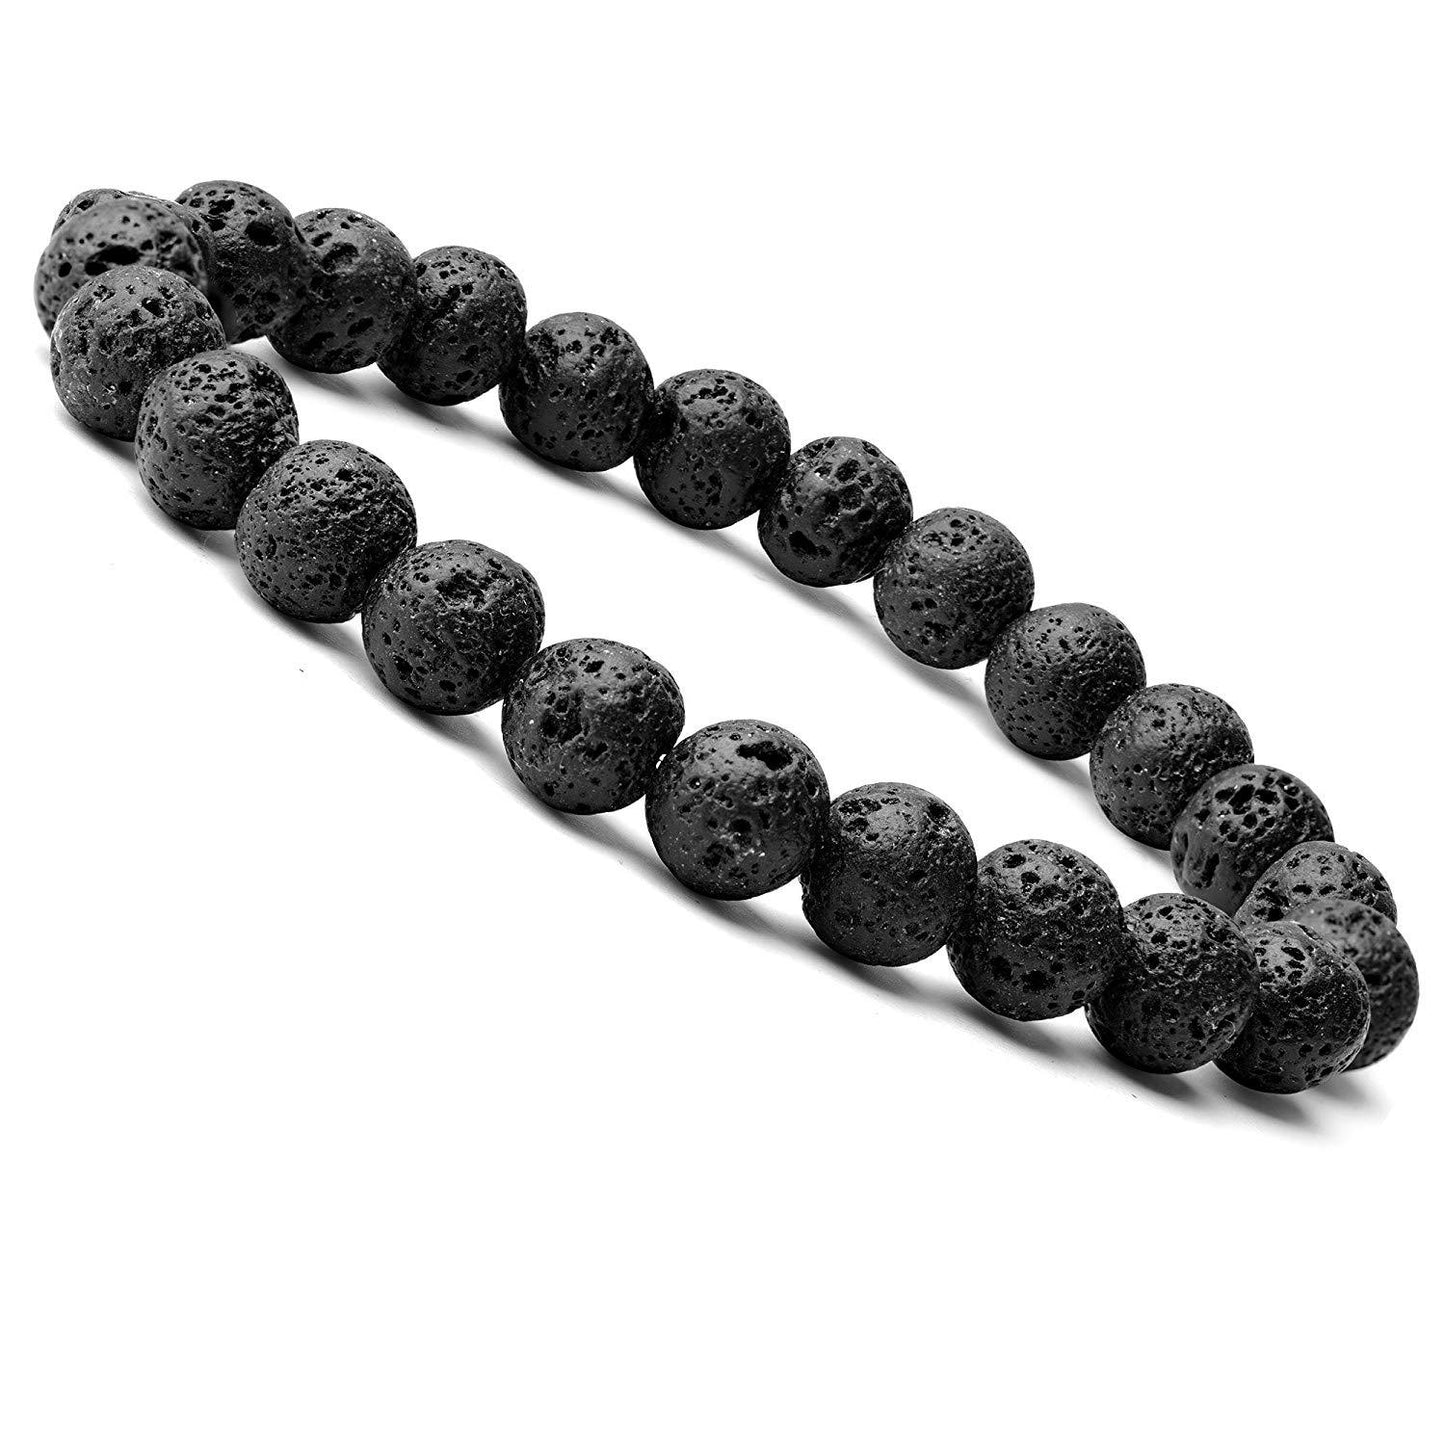 Black Lava Bracelet - 8mm Beads - Approx 6.9 Inch